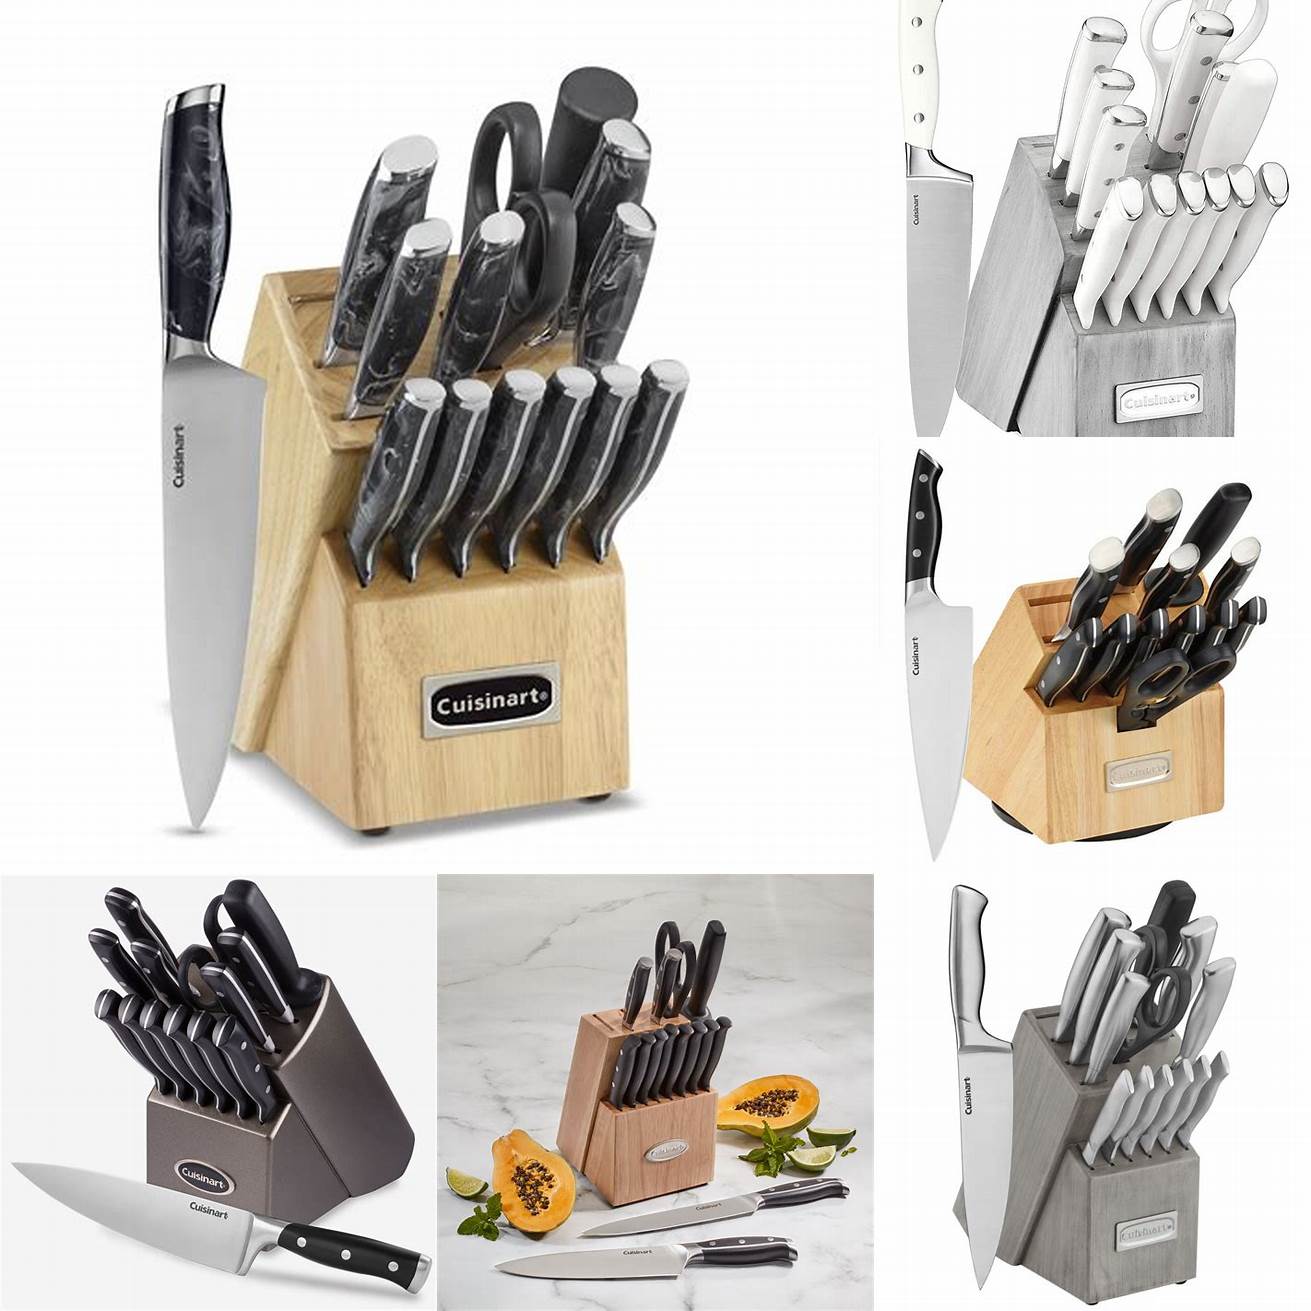 5 Cuisinart Classic 15-piece Knife Block Set